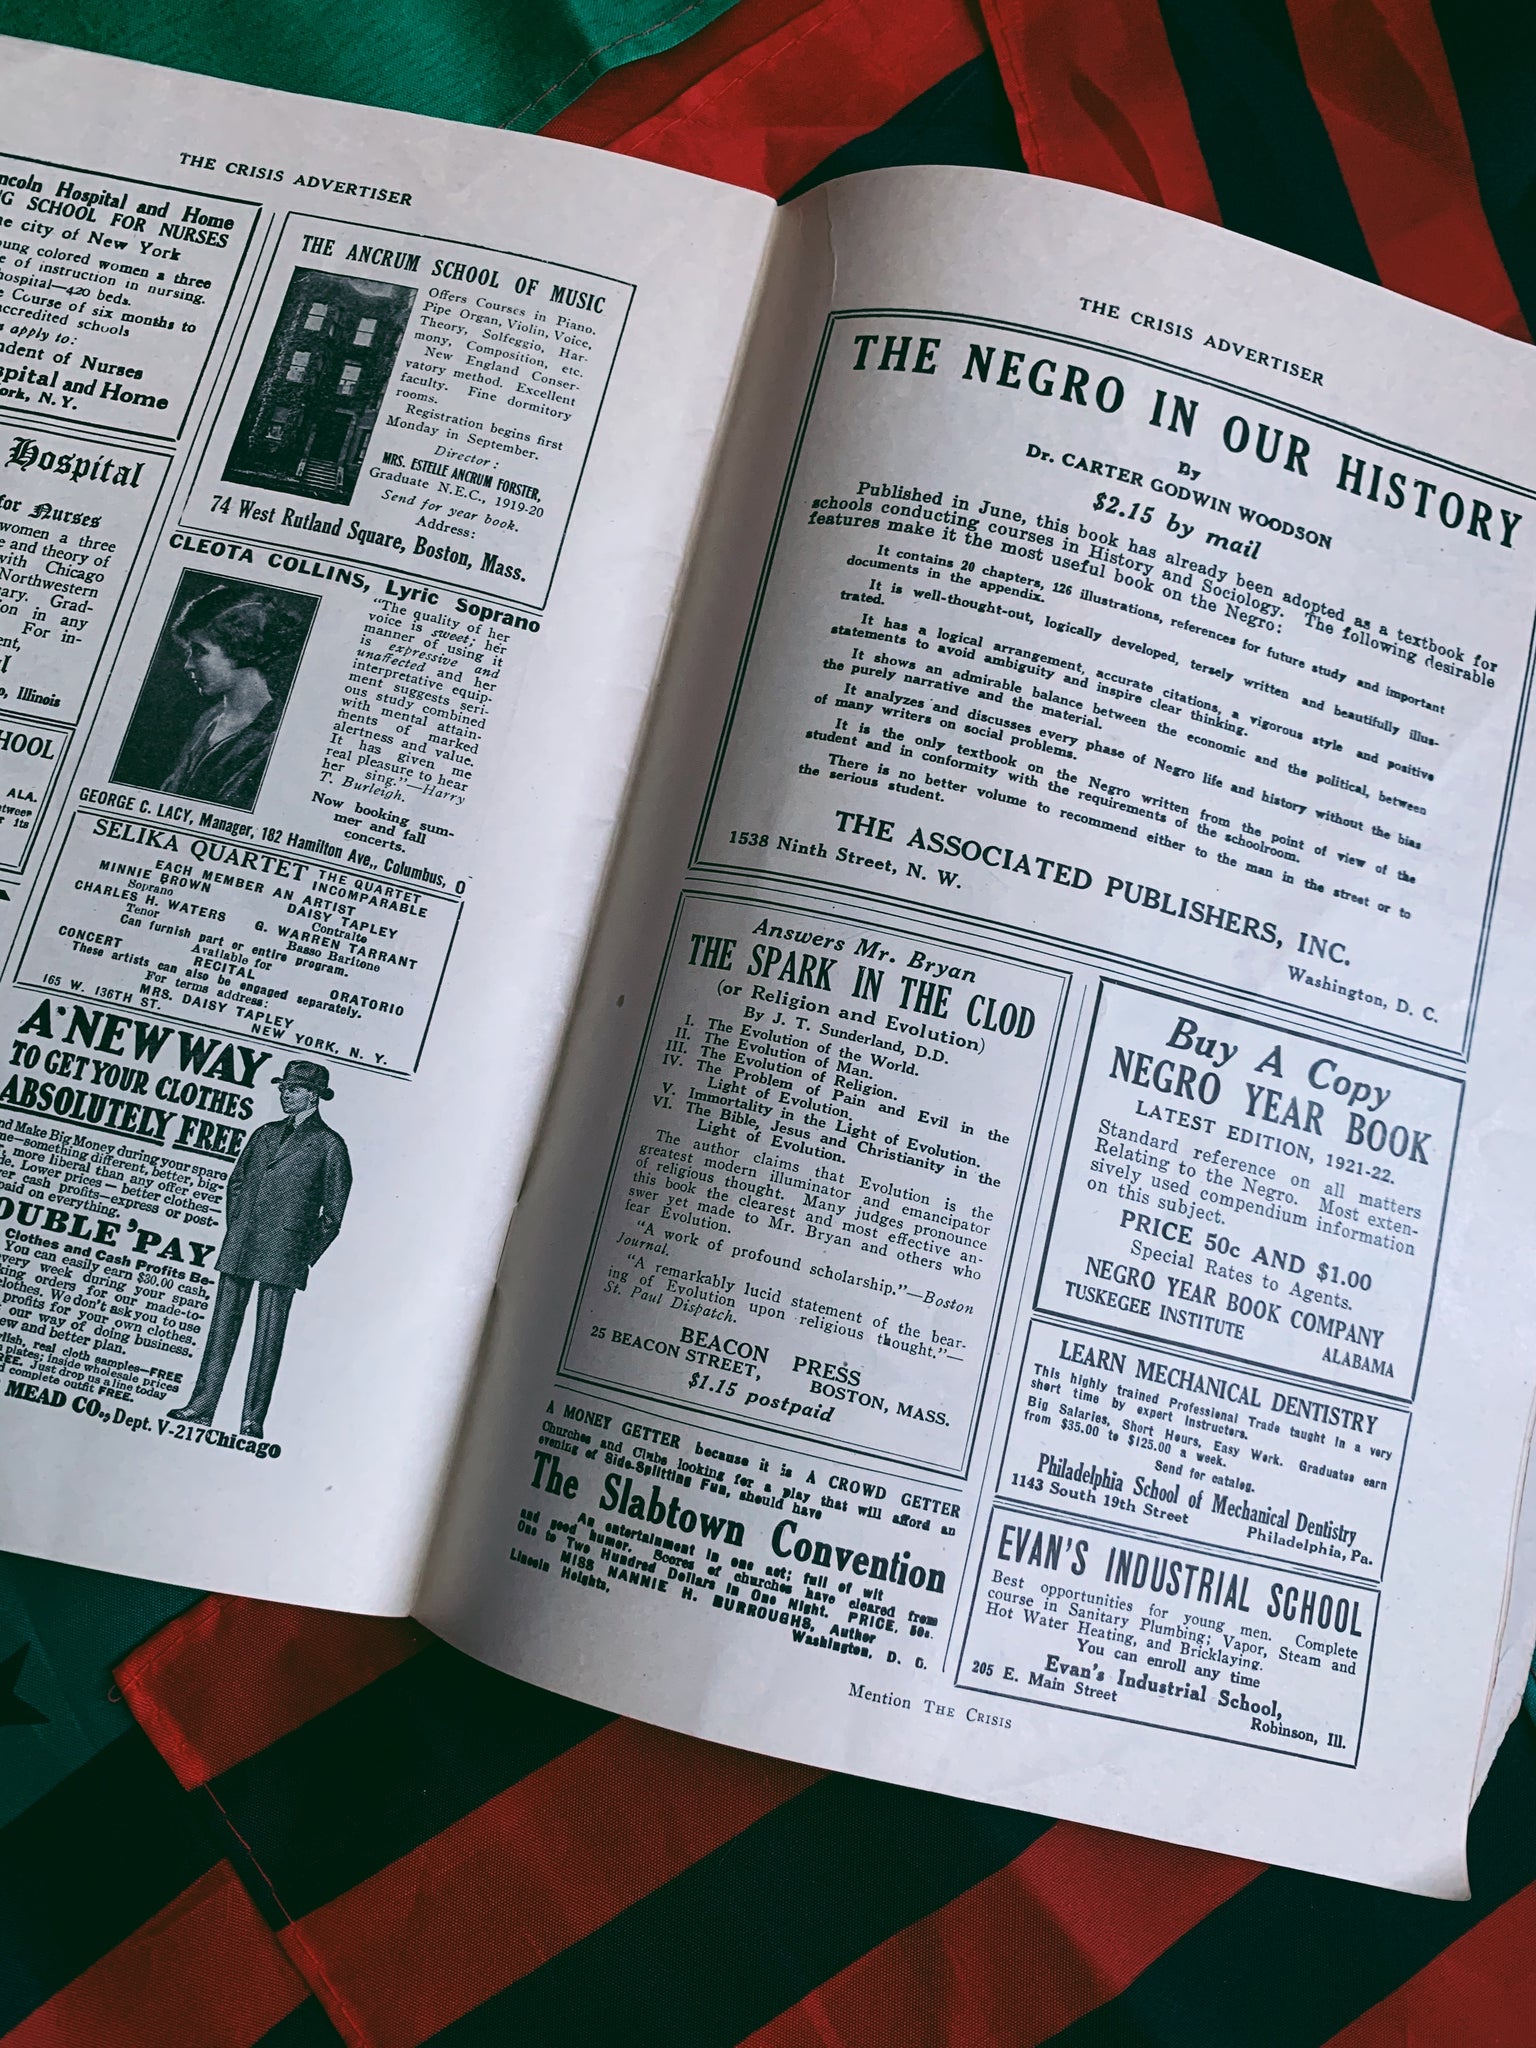 Vintage Rare NAACP “The Crisis” Magazine // Ethiopia (August 1923)